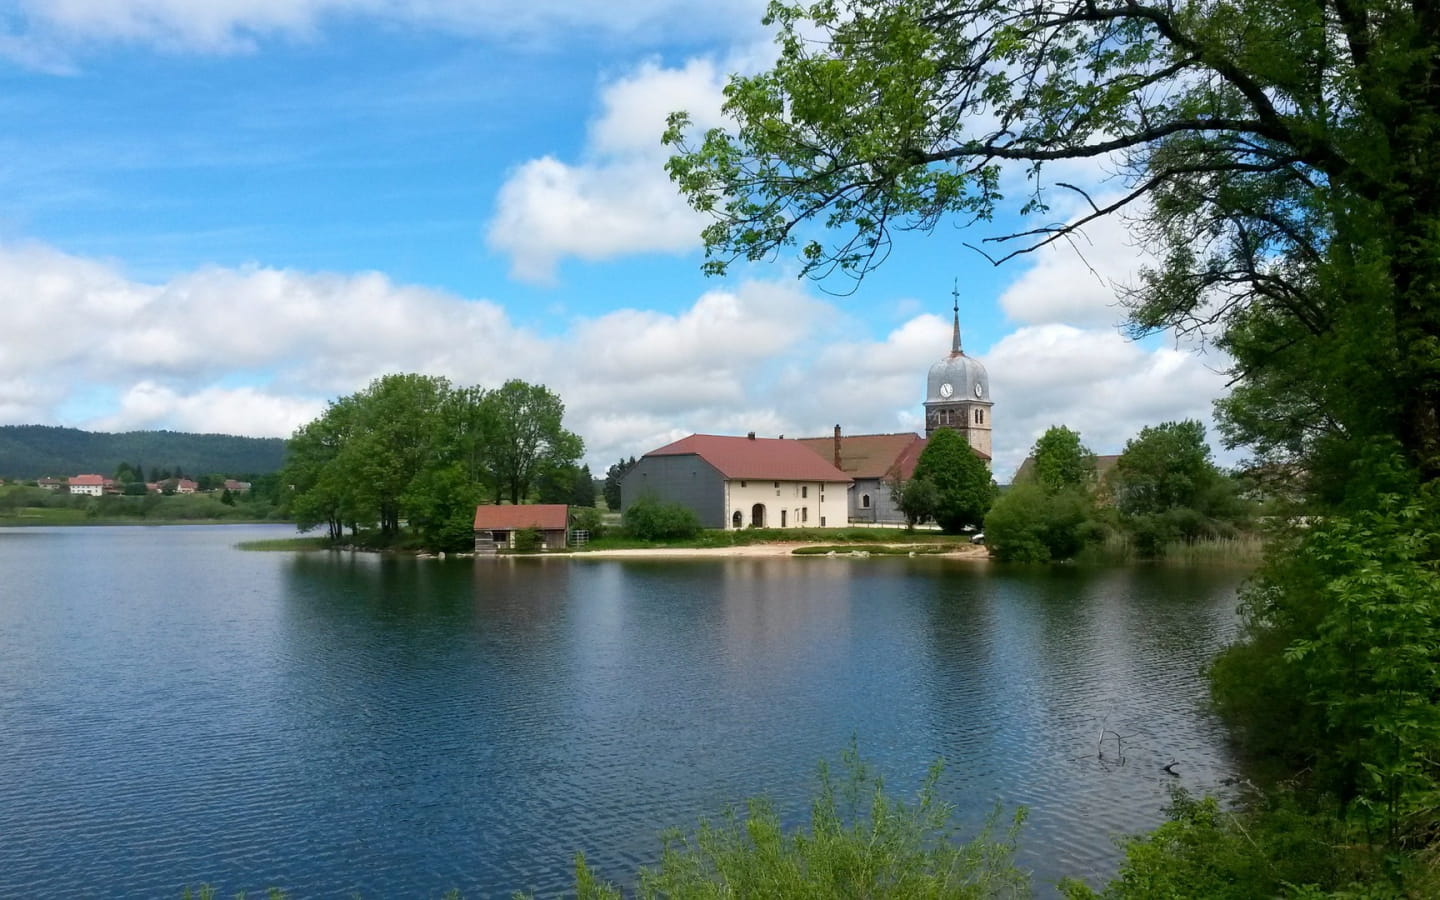 Tour of the Abbey lake